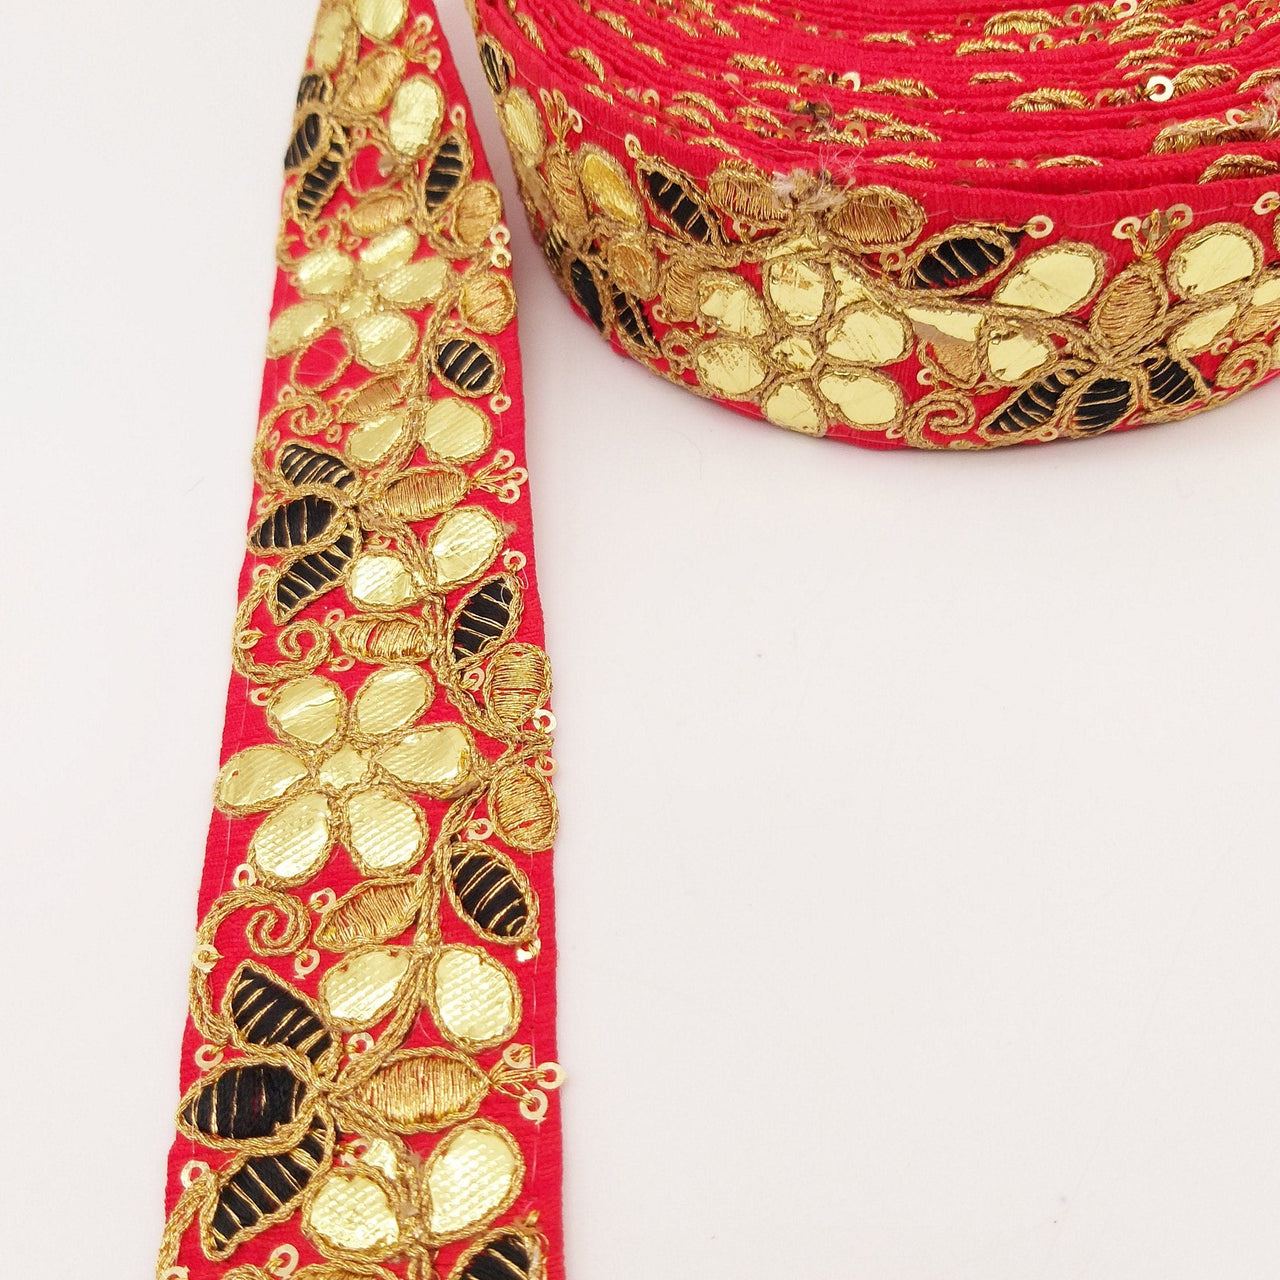 Red Fabric Trim In Black & Gold Floral Embroidery, Gota Patti Trim, Indian Flower Border